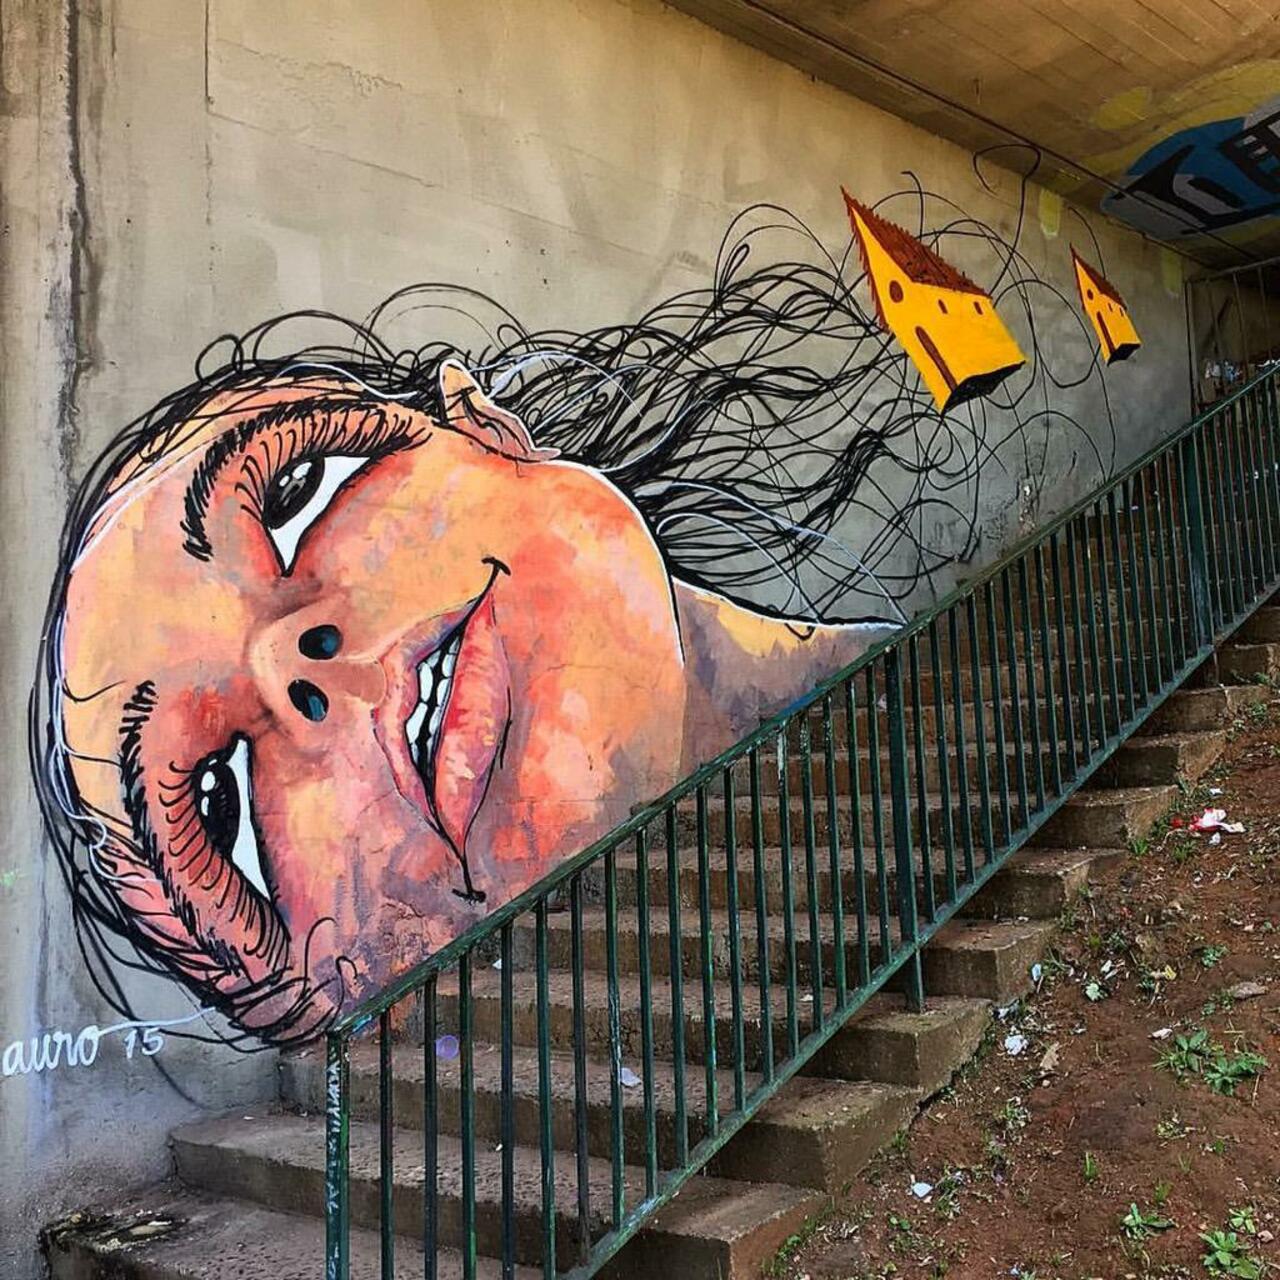 RT belilac "RT belilac "Street Art by Reveracidade in São Paulo 

#art #graffiti #mural #streetart http://t.co/ExUXoIutkT""